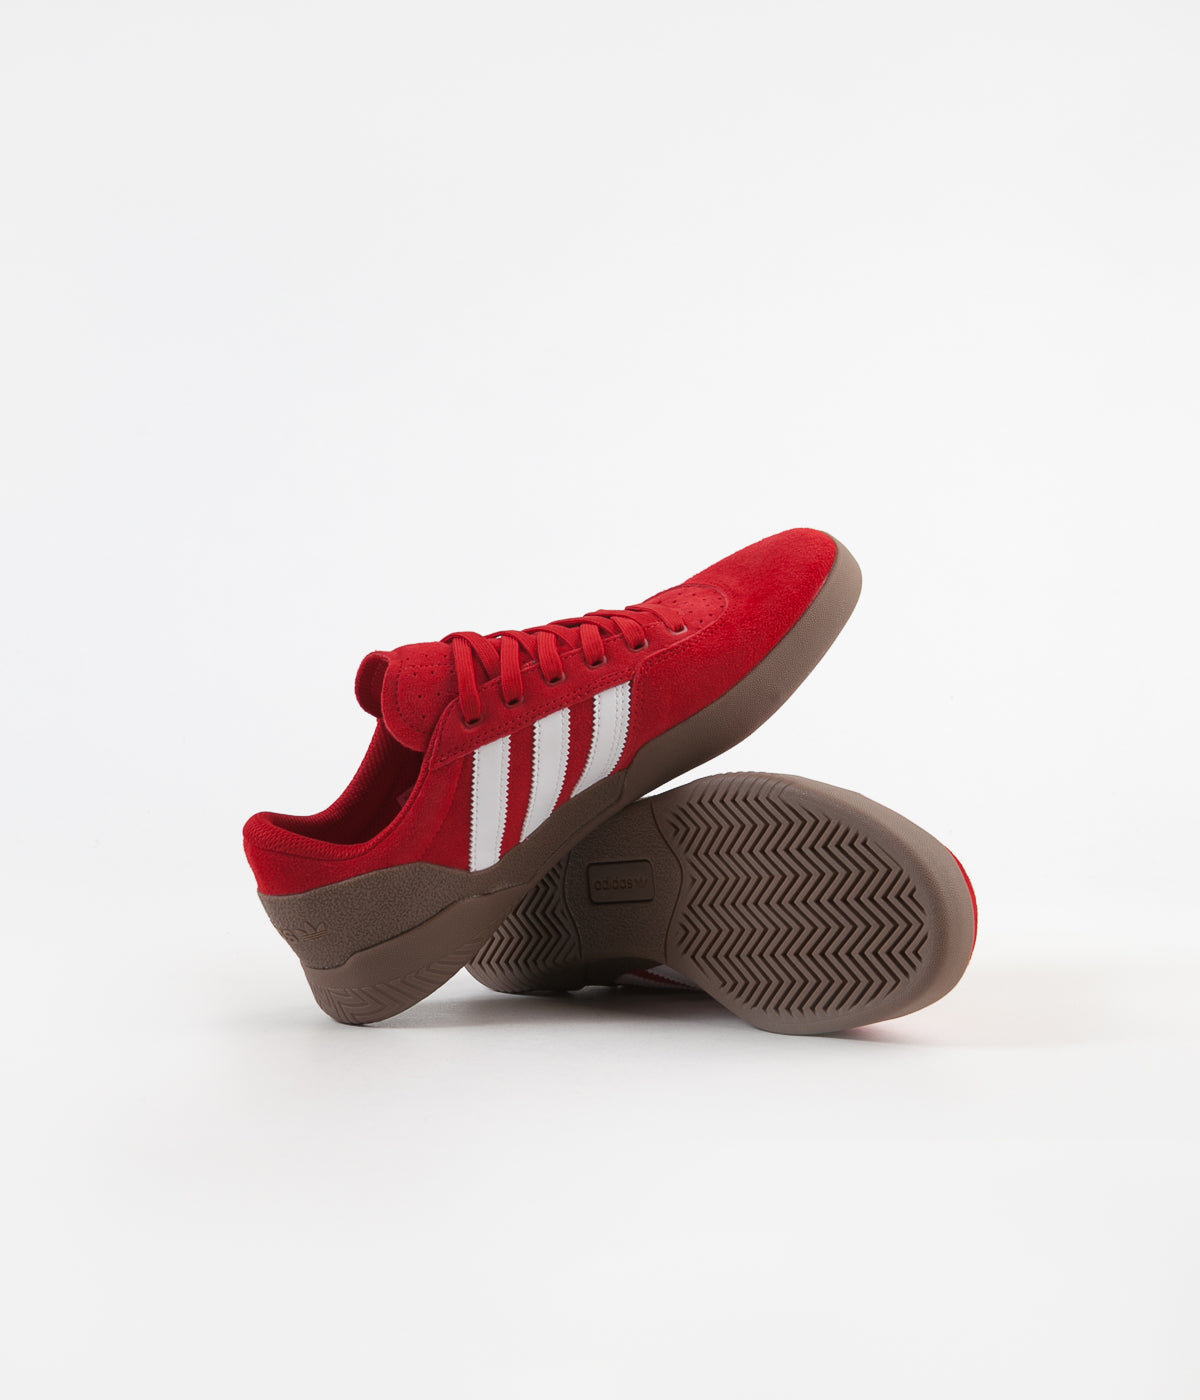 Bolsa Nebu Expulsar a Adidas City Cup Shoes - Scarlet / White / Gum | Flatspot